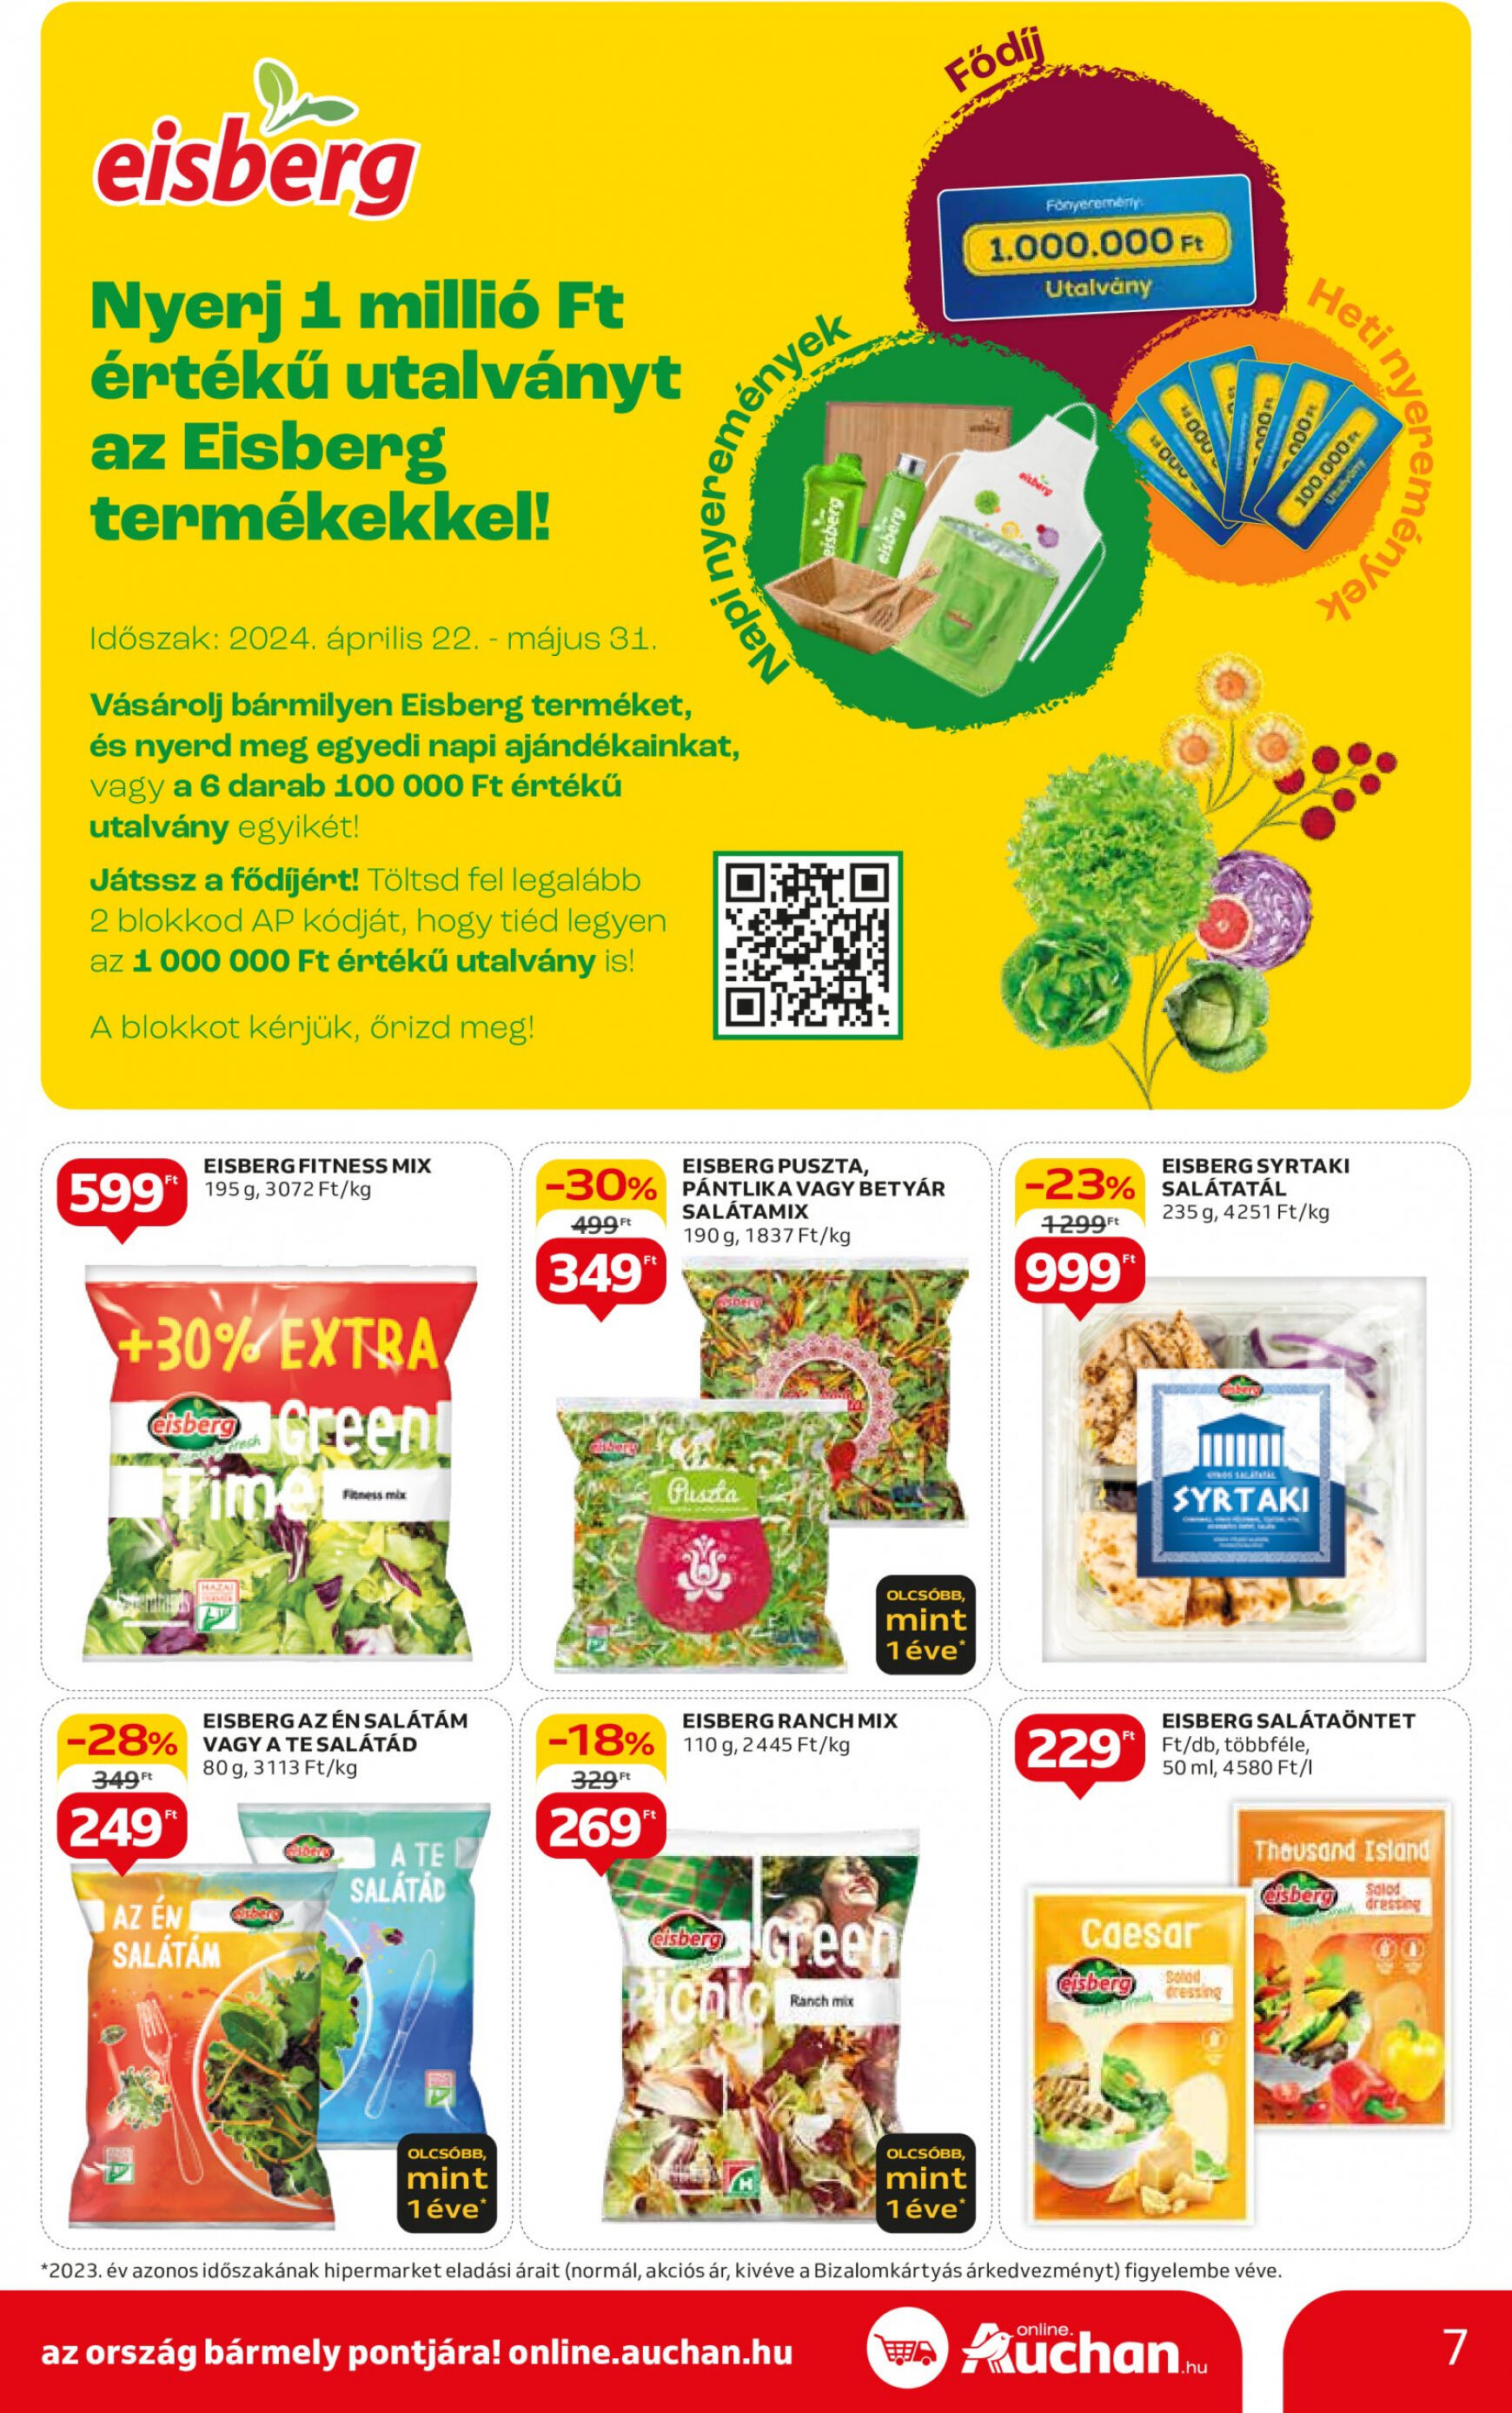 auchan - Aktuális újság Auchan 05.09. - 05.15. - page: 7